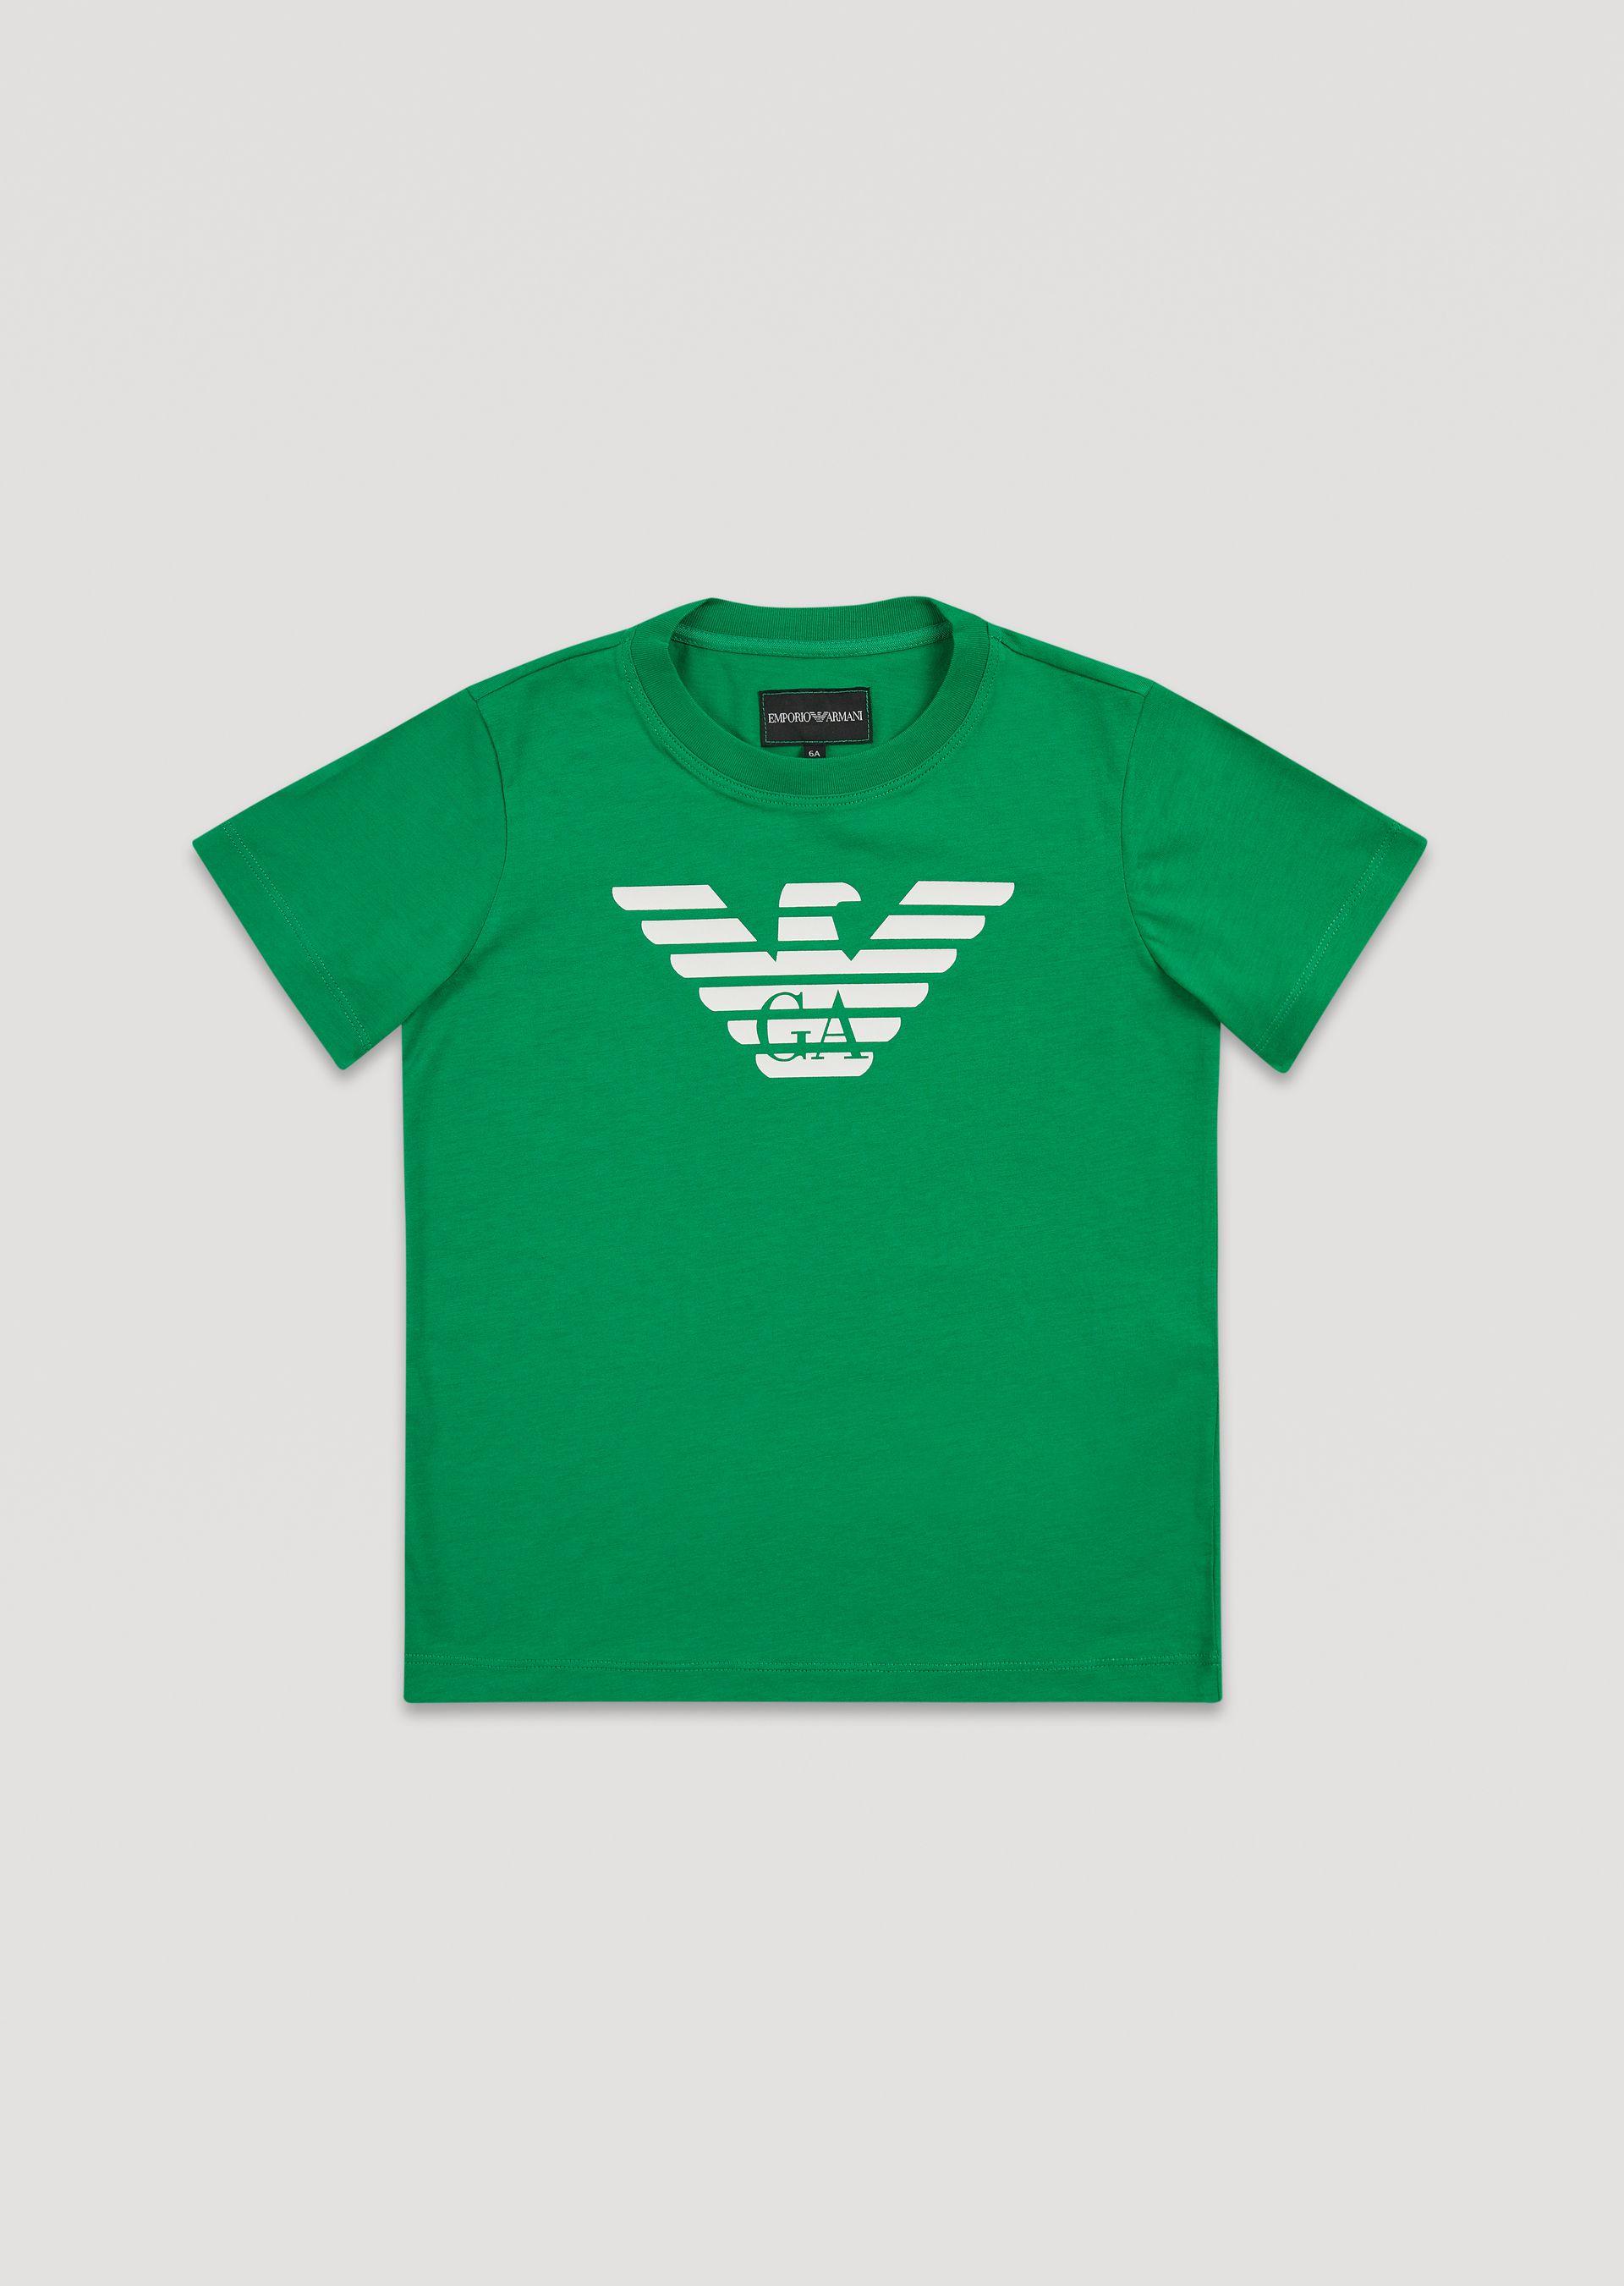 green armani t shirt